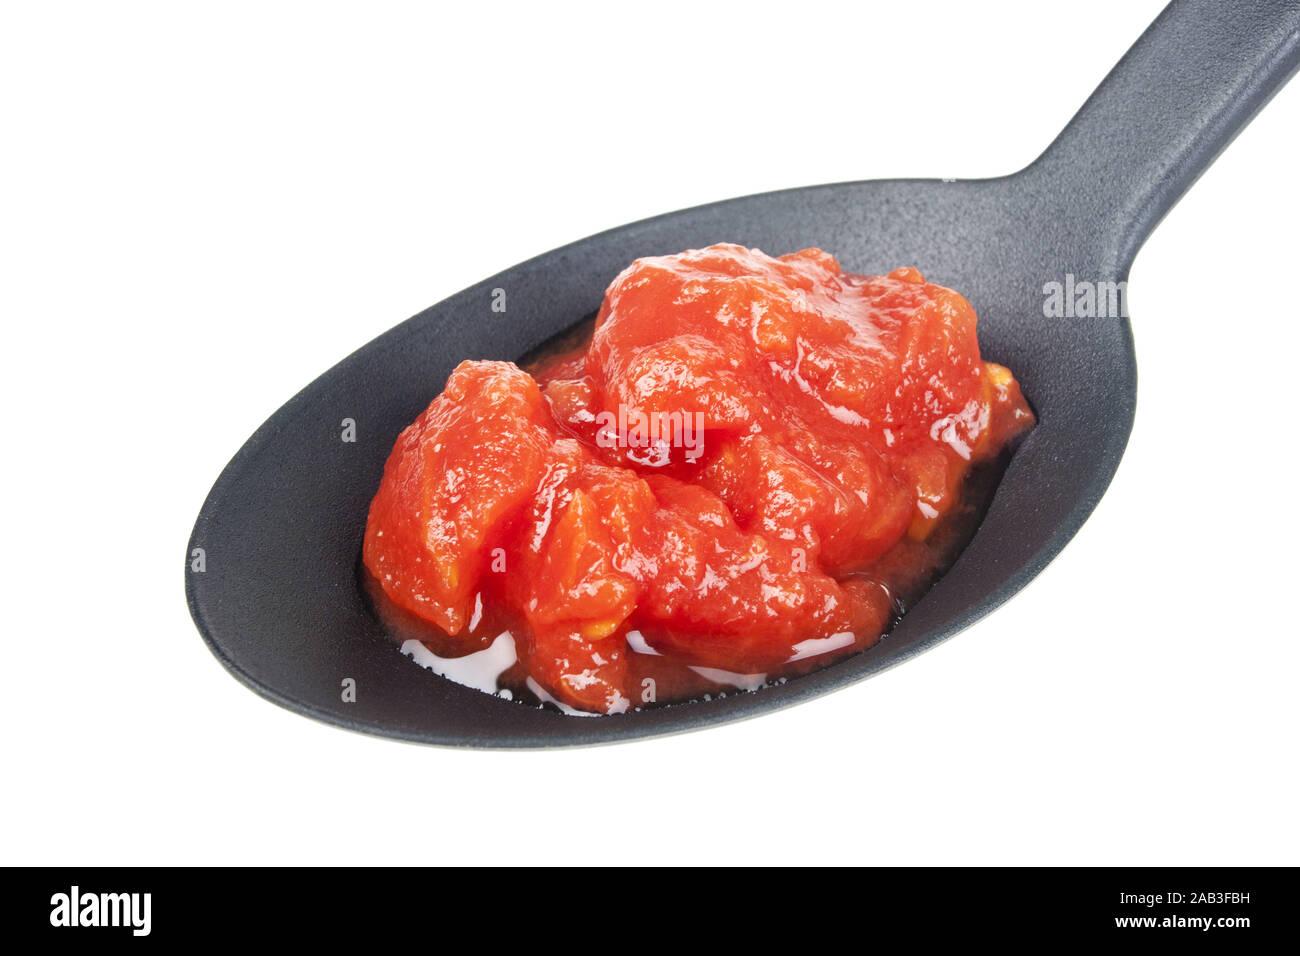 Passierte Tomaten auf einem Loeffel |Crushed tomatoes on a spoon| Stock Photo